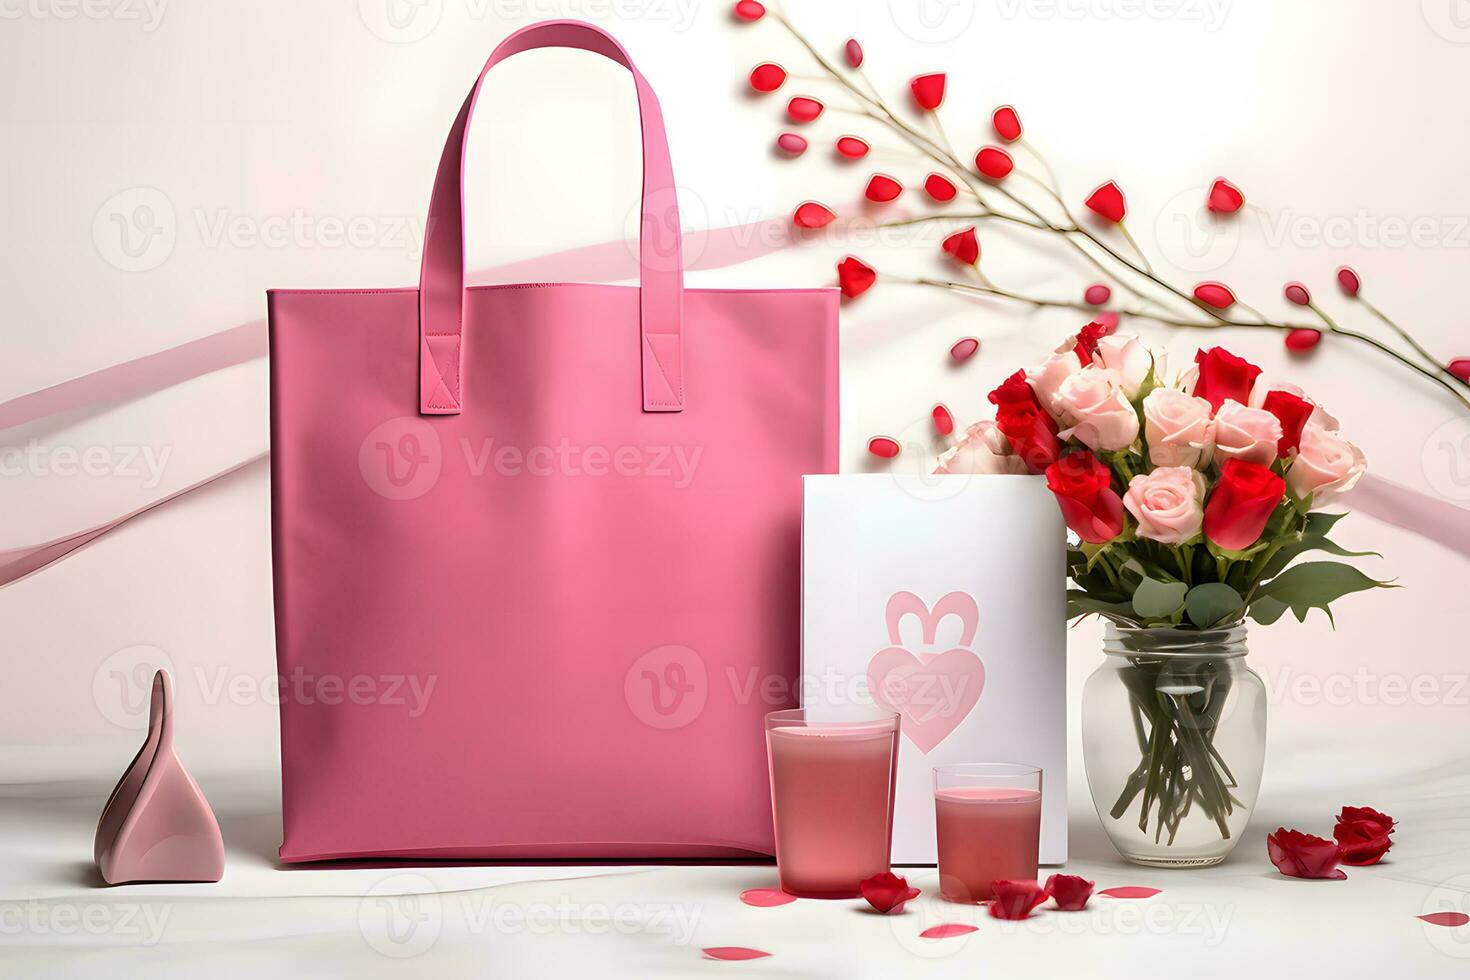 ai gegenereerd Valentijn tote zak Product model, Valentijnsdag dag roze tote zak mockup foto